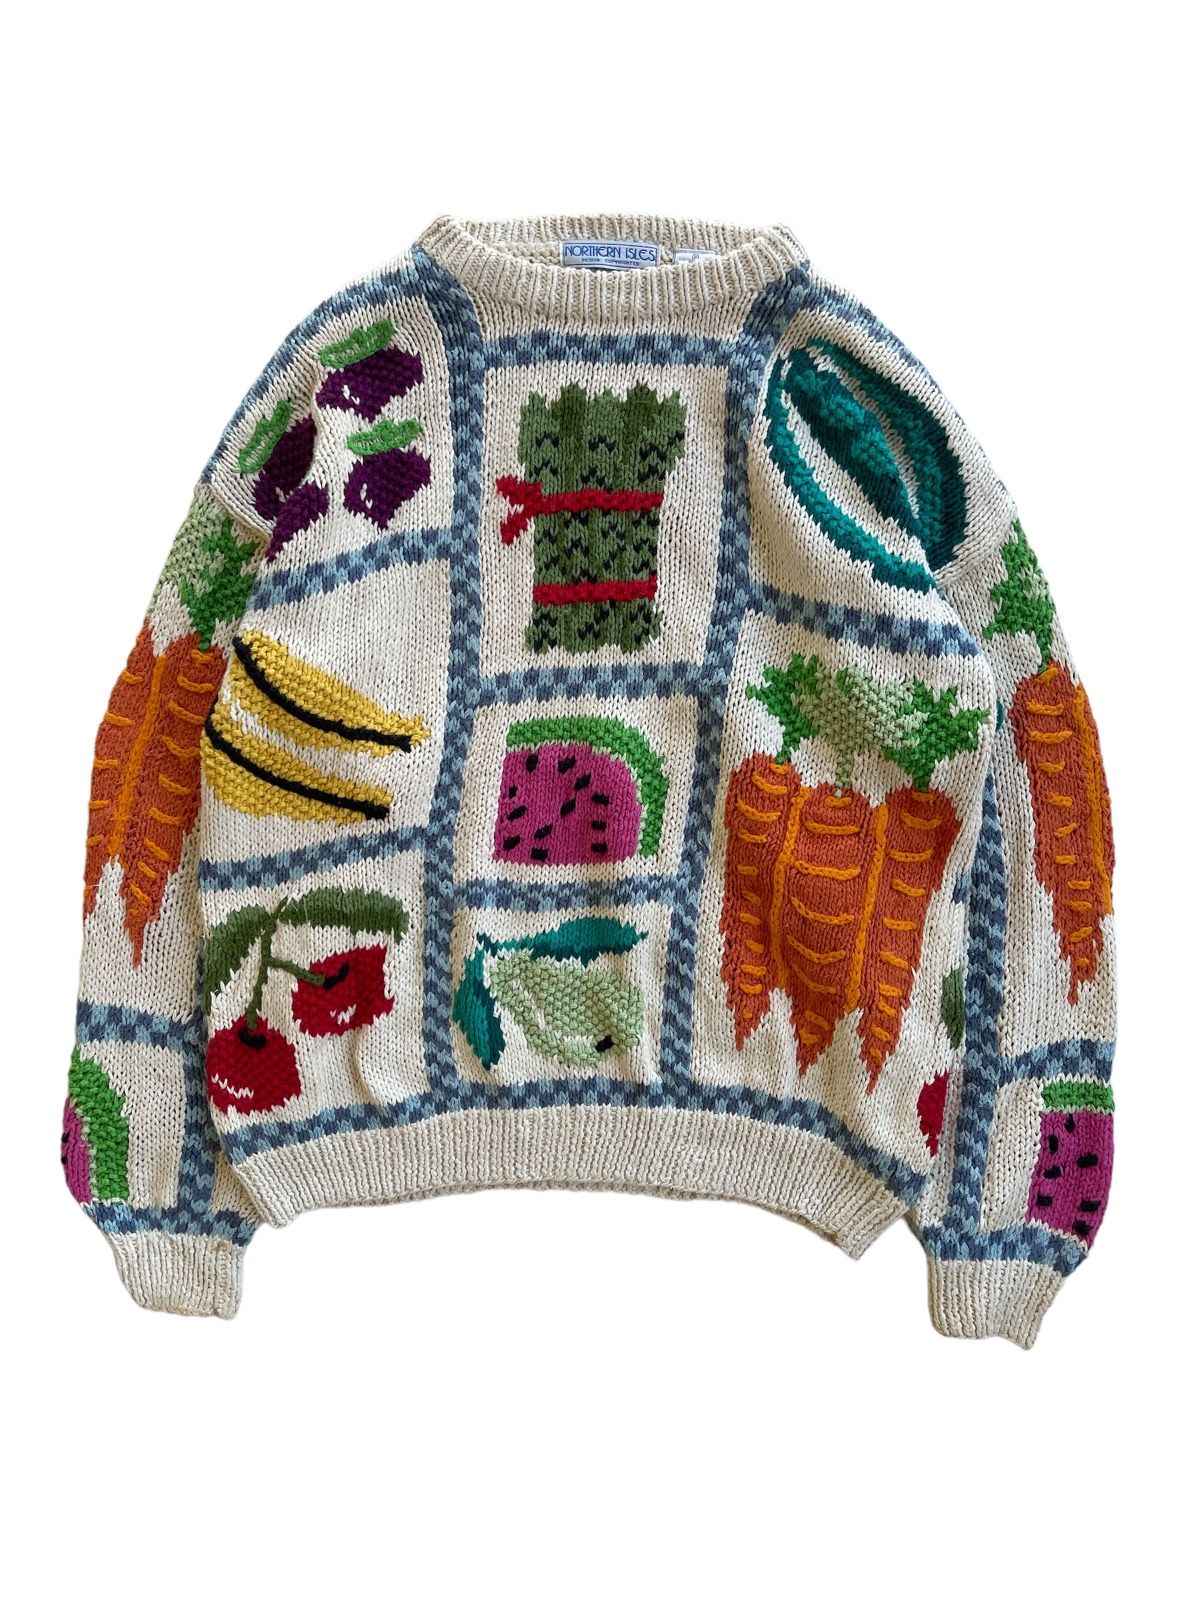 Vintage Vintage Northern Isles Fullprint Handknit Sweater Size M / US 6-8 / IT 42-44 - 1 Preview